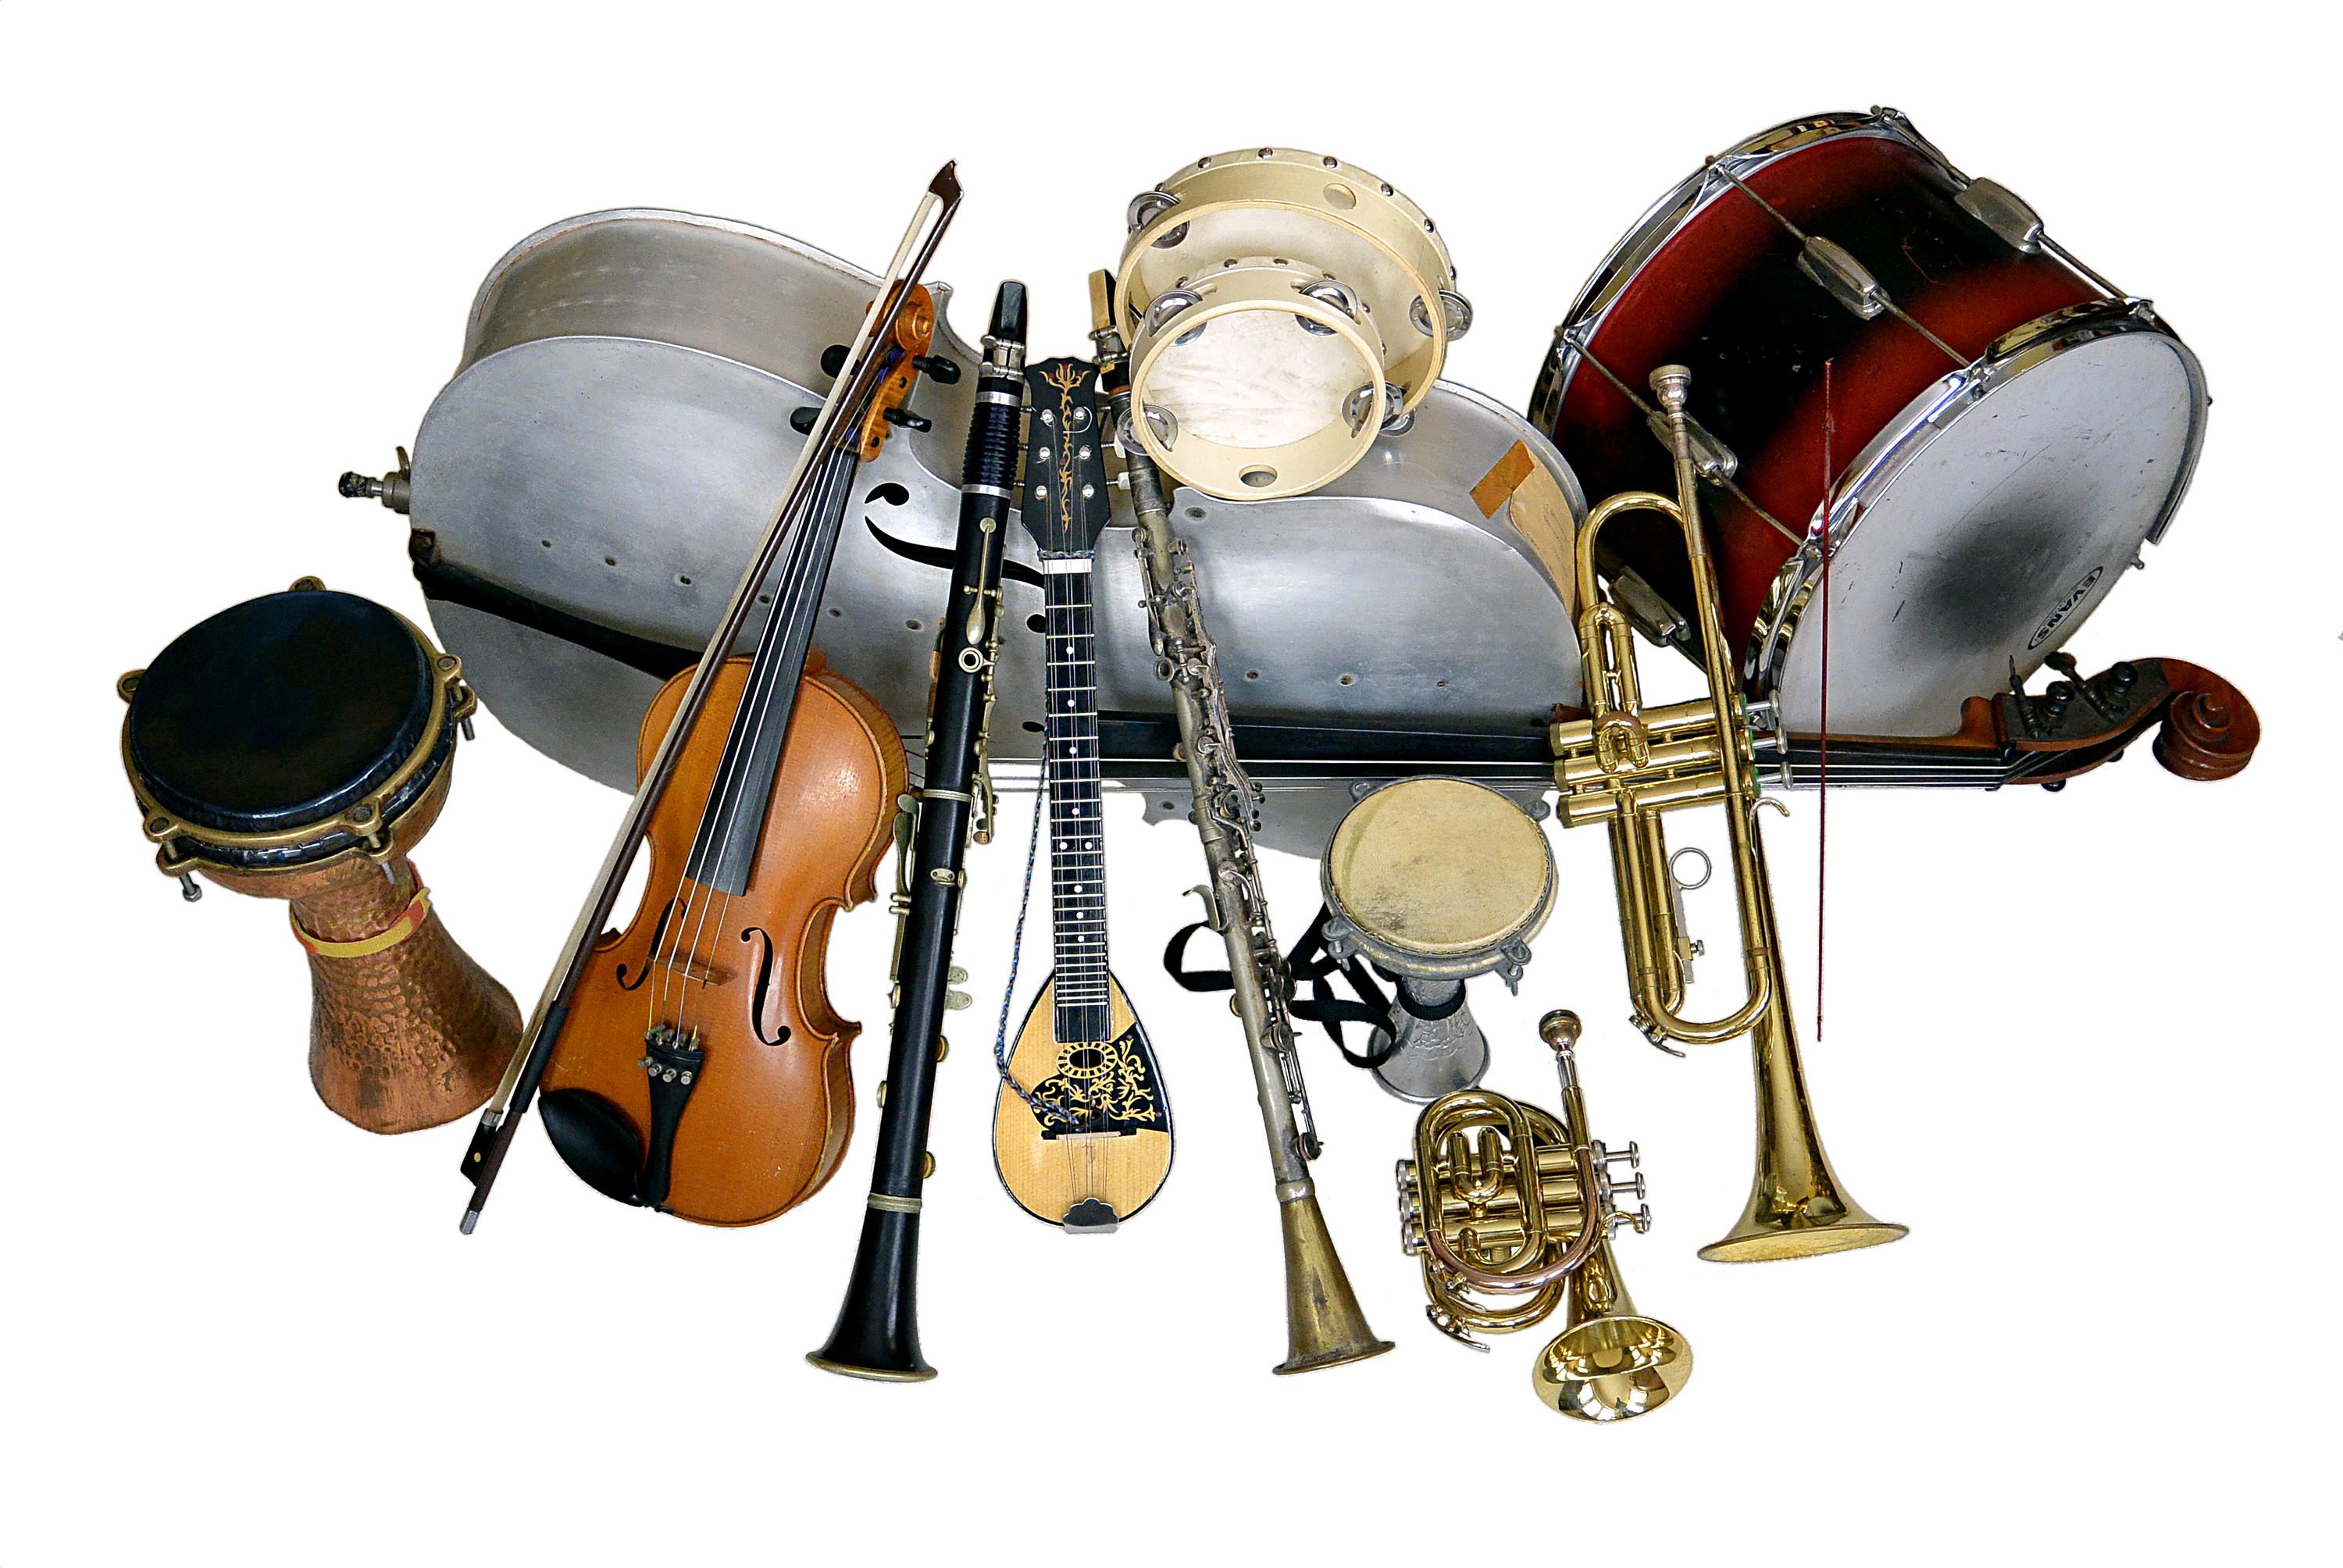 Photo of ethnic instruments including baglama, darabukas, kaval, Albert-system clarinets, tambourines, tupan, trumpets, cello, and violin